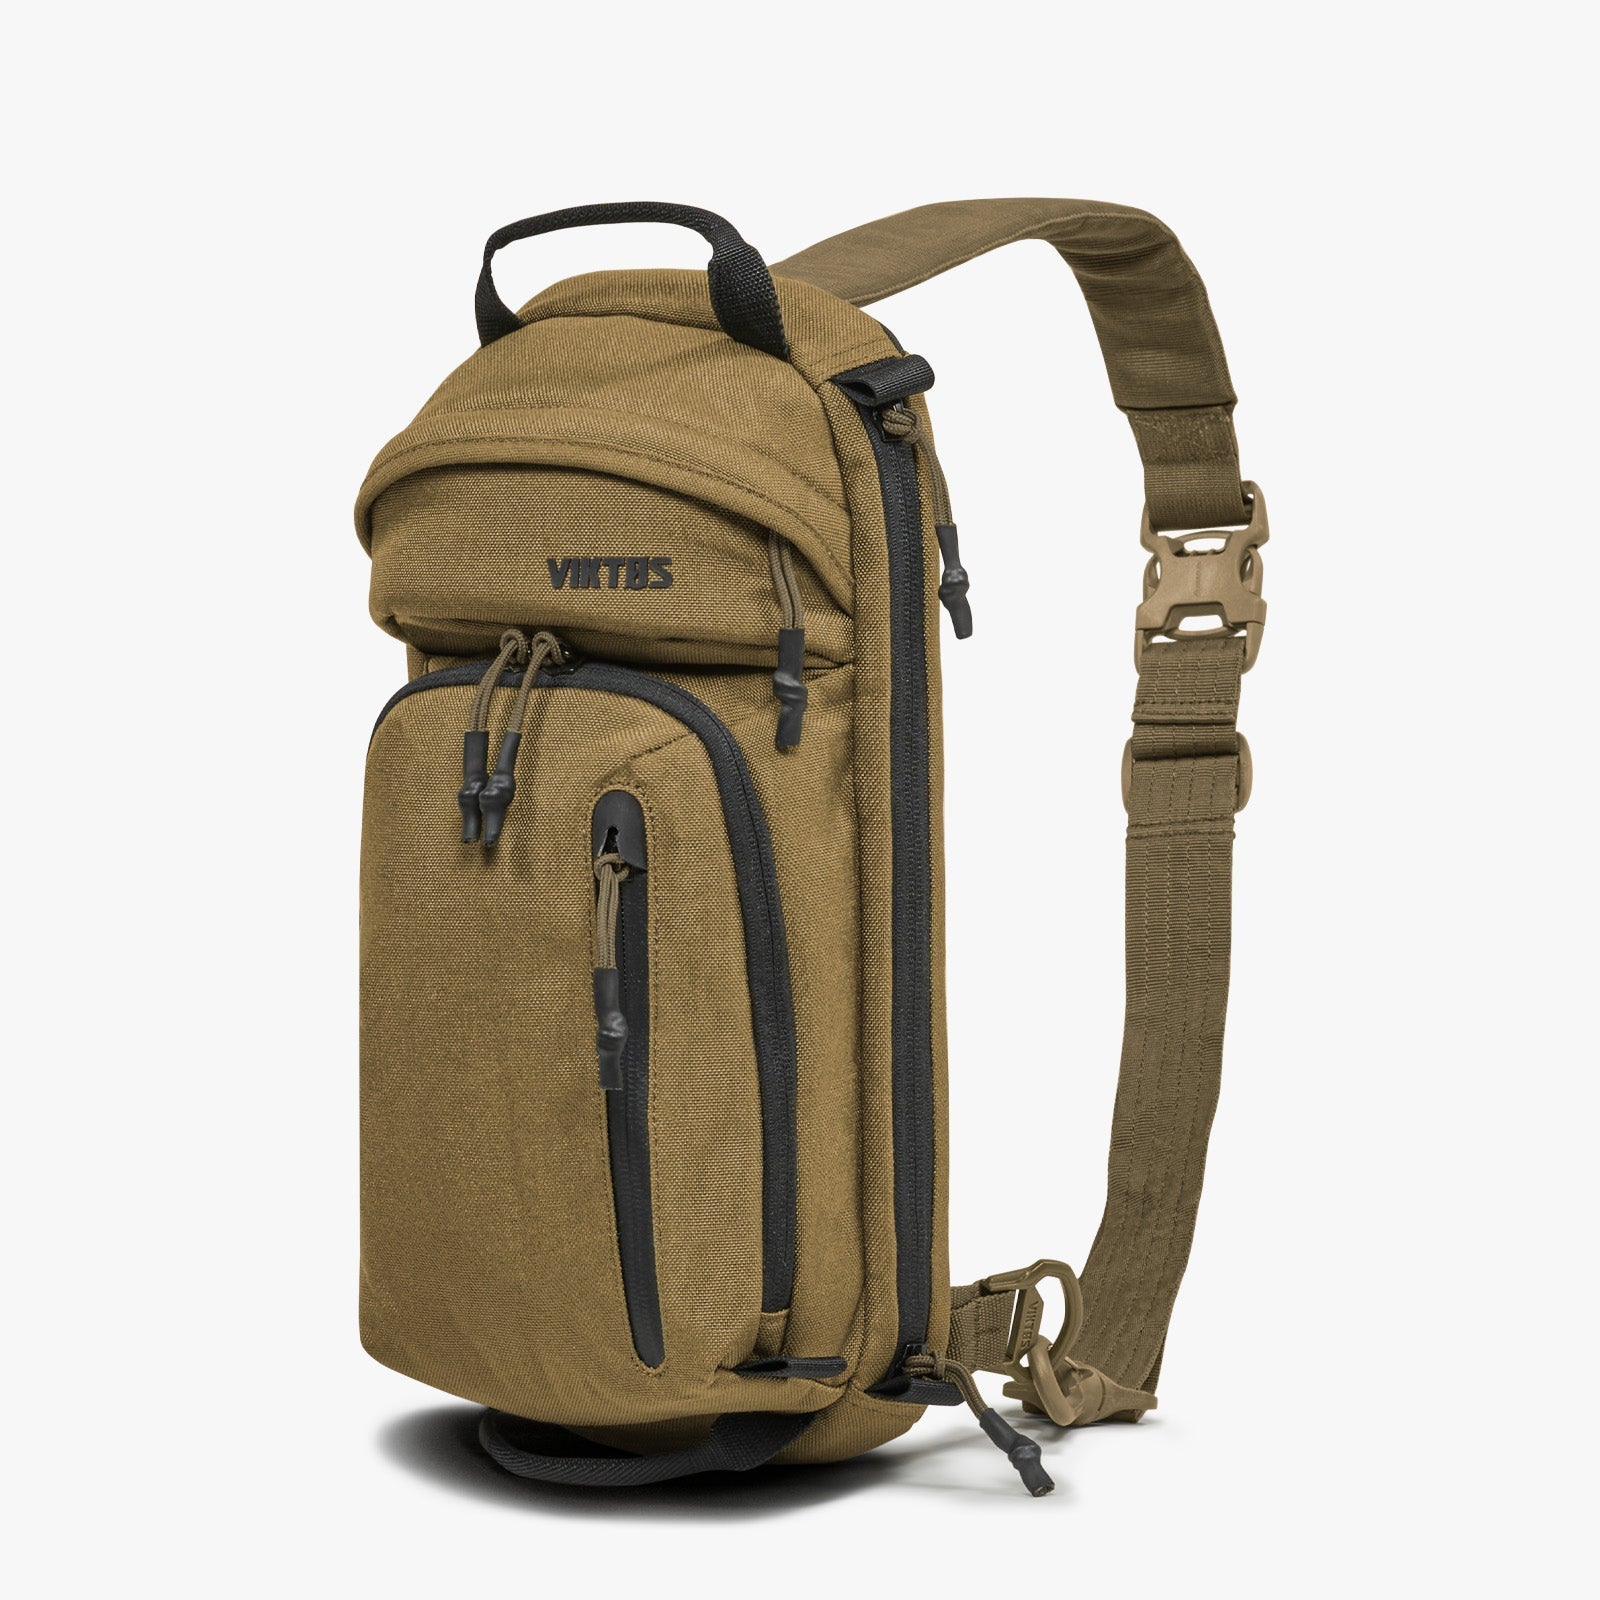 VIKTOS Upscale 3 Sling Bag Bags, Packs and Cases VIKTOS Coyote Tactical Gear Supplier Tactical Distributors Australia